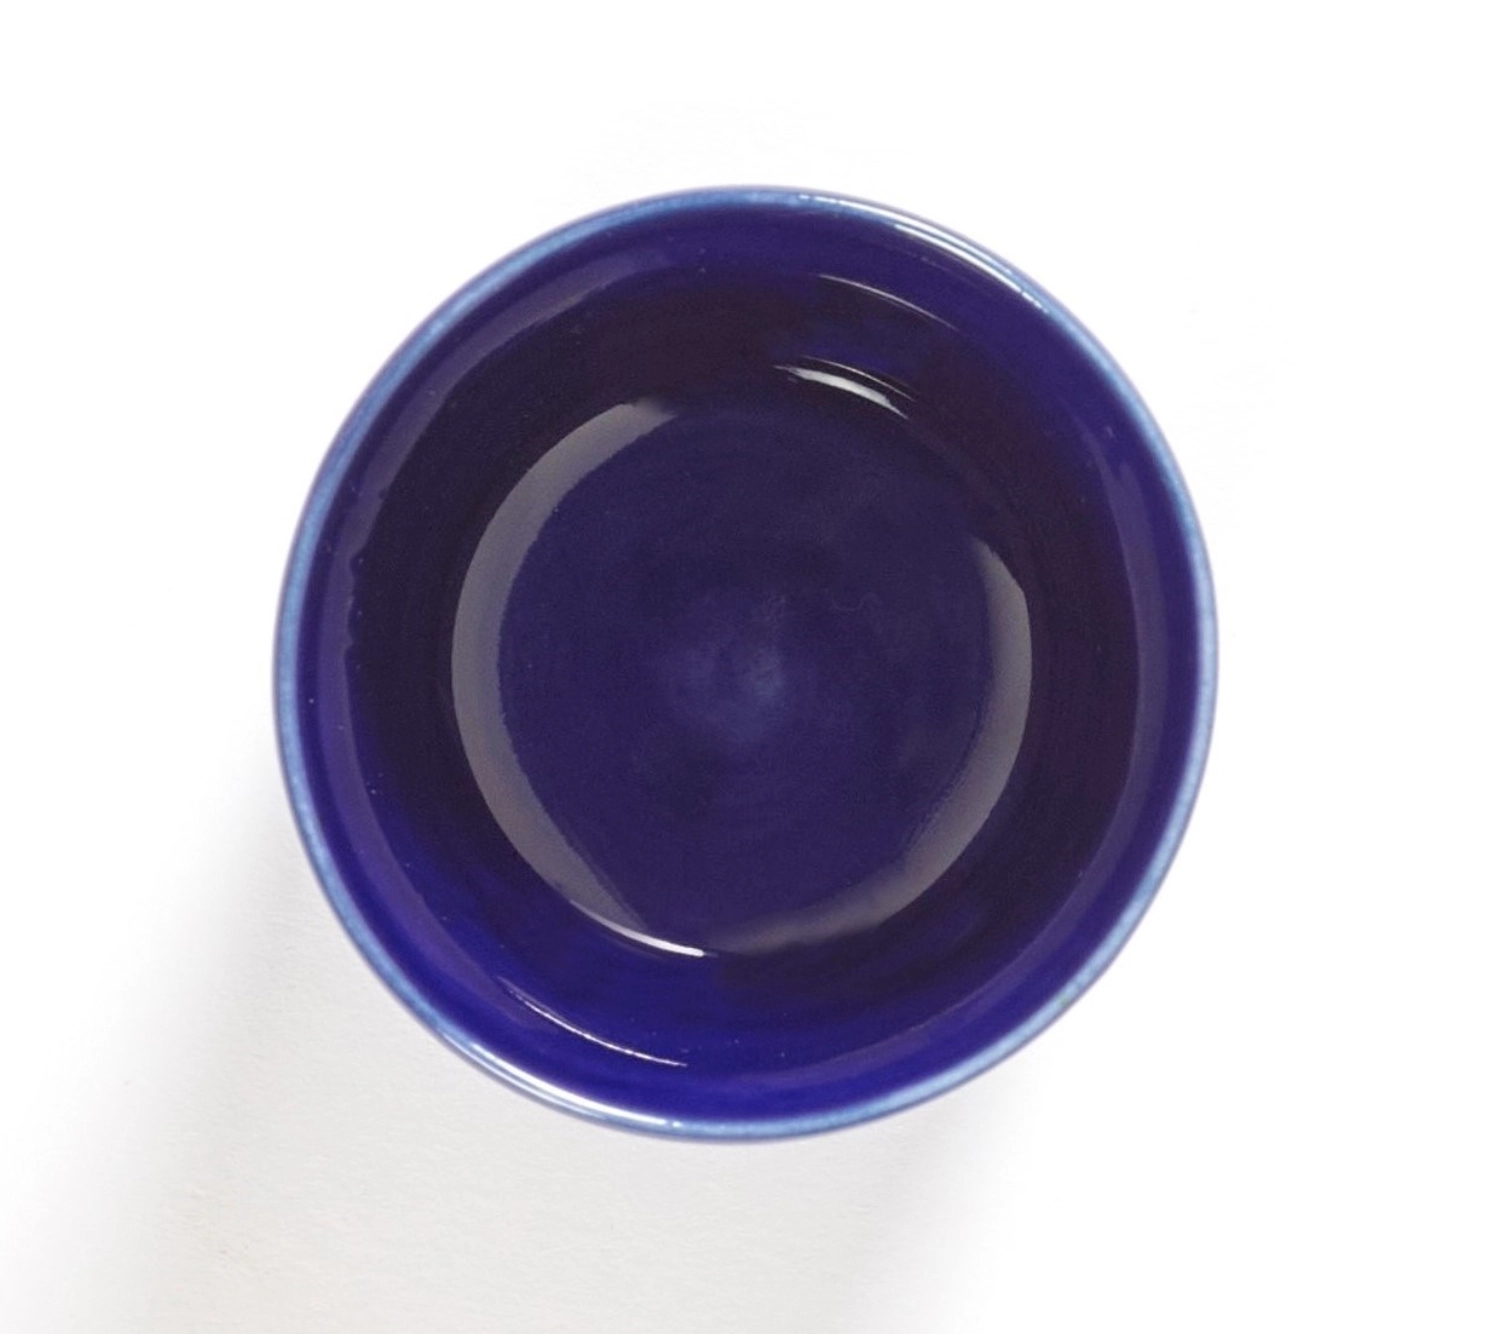 Otto. F. Espressotasse 15 Cl Lapis Lazuli Swirl-Stripes Whit